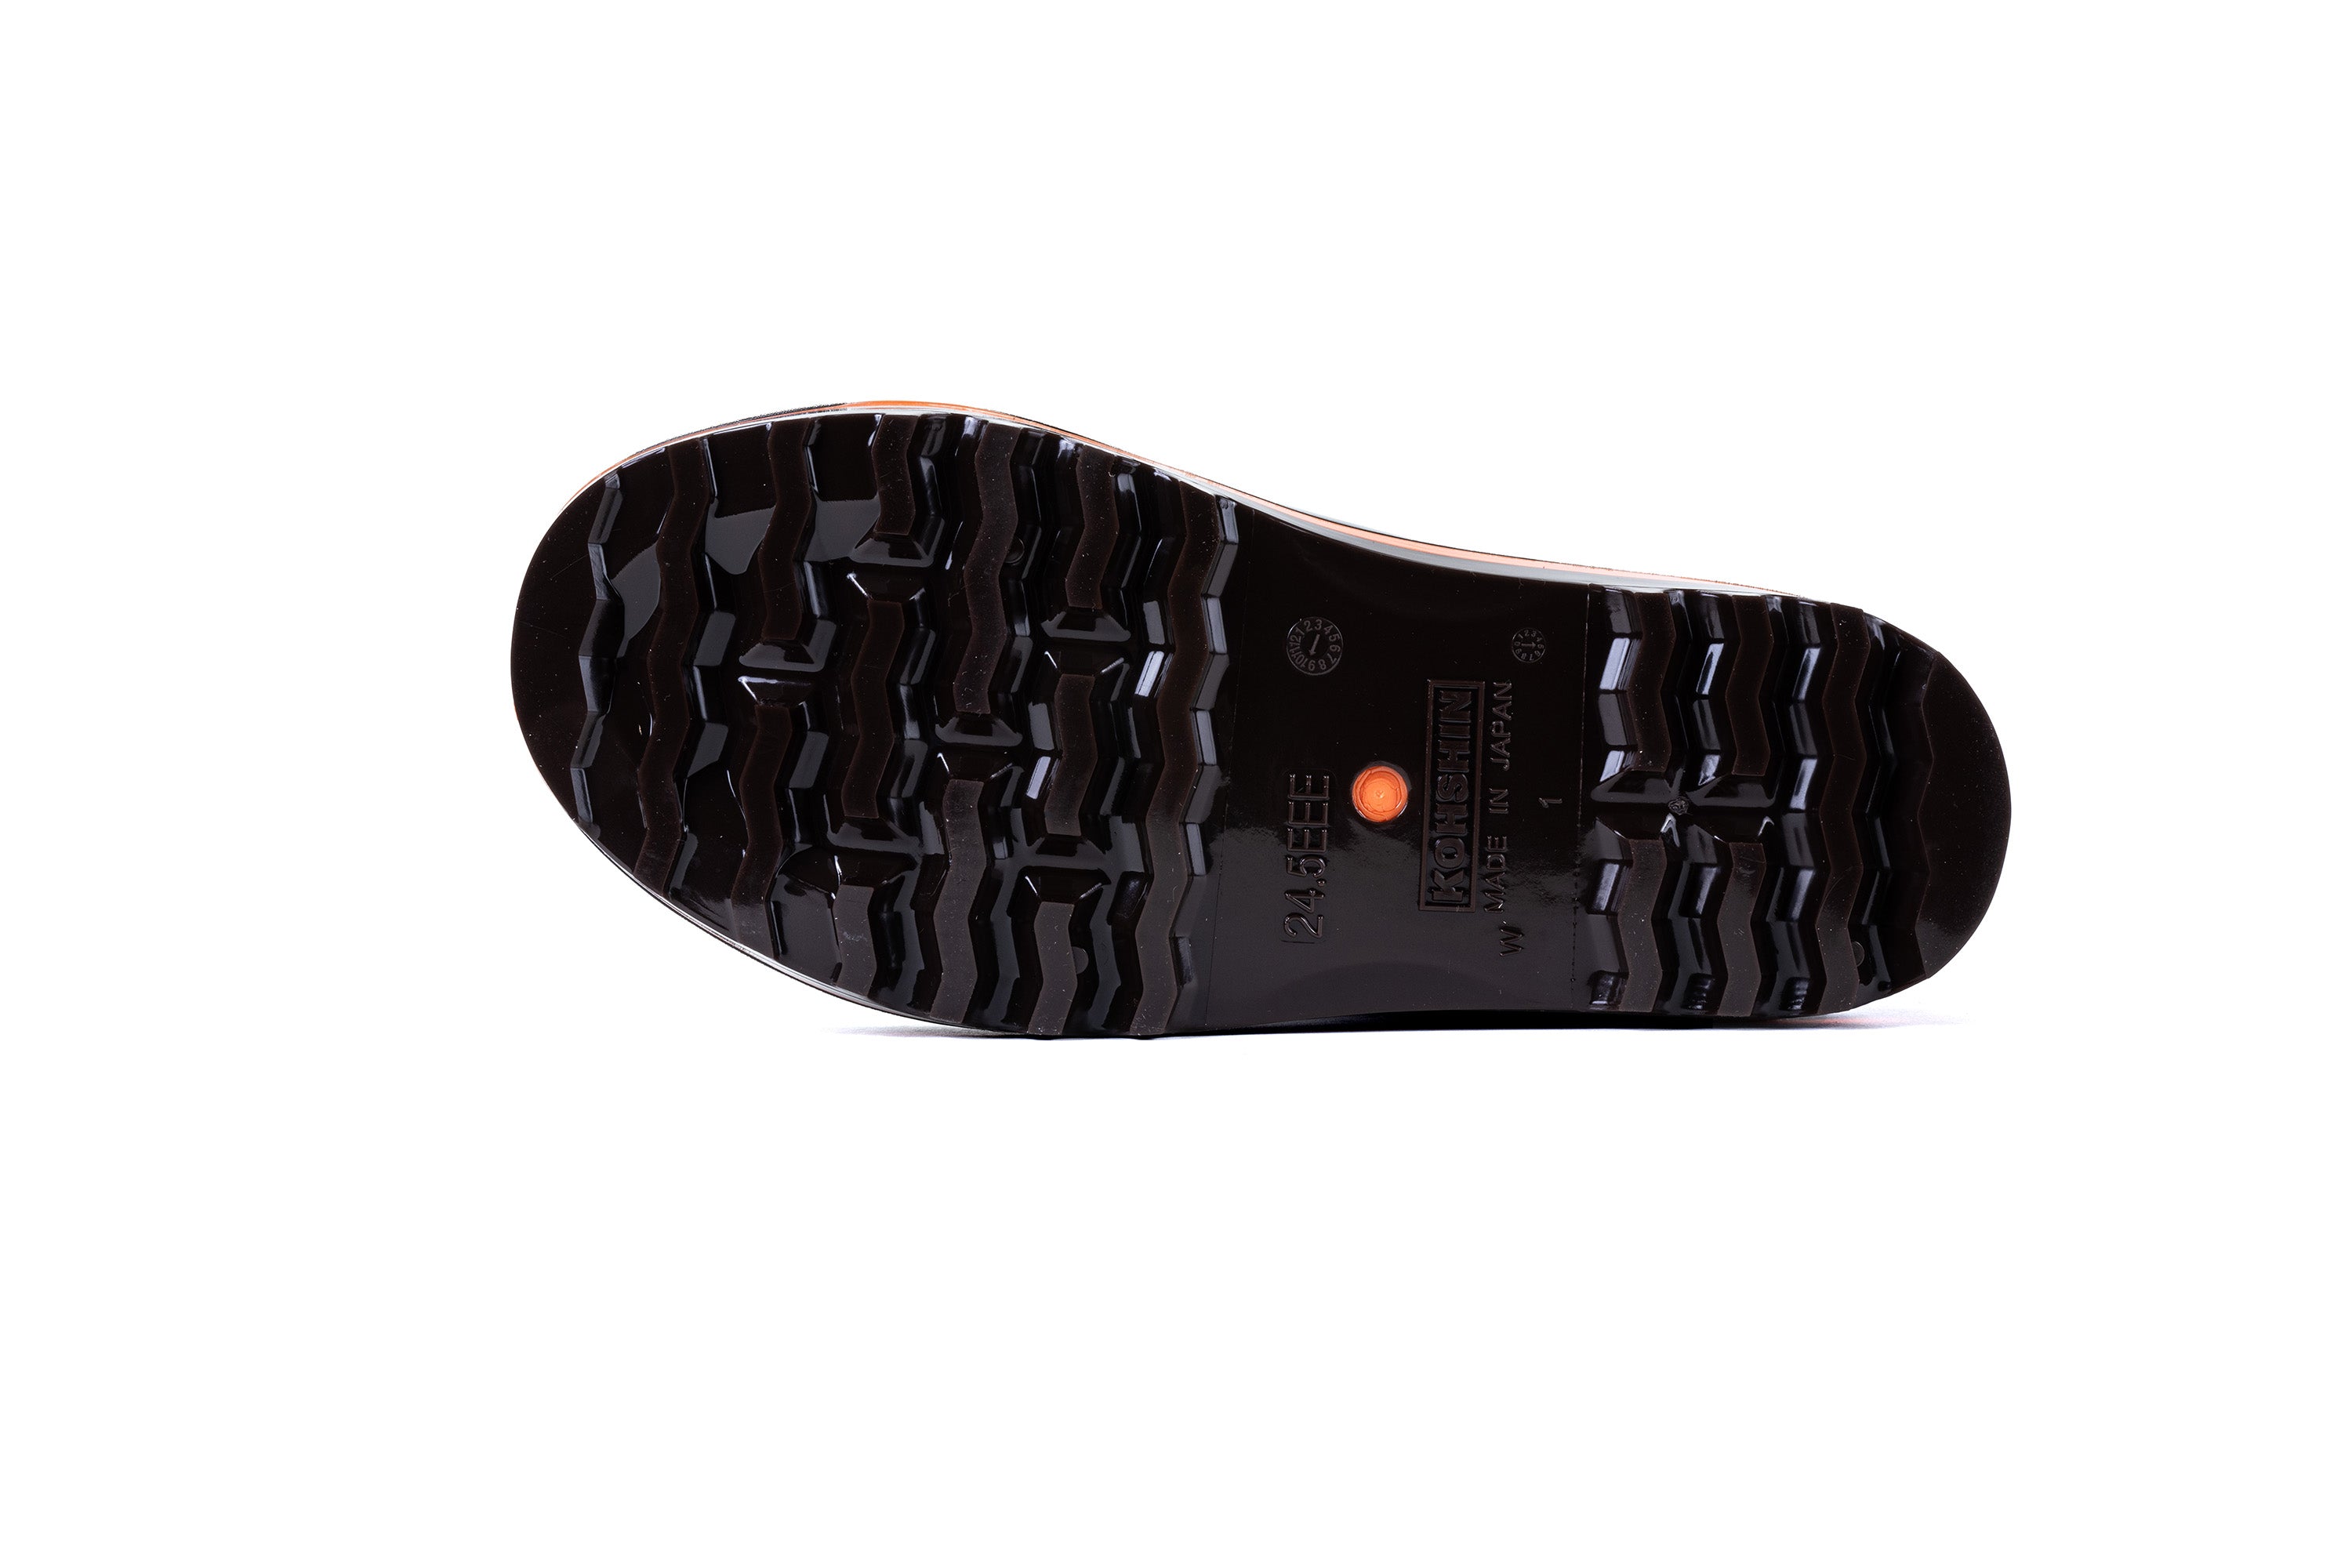 HB-500 Steel Toe Cap Rain Boots - Special Design for Kitchen (Japan Made with New Technology)-ZONA (KOHSHIN)-BK-JP/TW Size-1: 230-偉豐鞋 WELL SHOE HK-Well Shoe-偉豐鞋-偉豐網-荃灣鞋店-Functional shoes-Hong Kong Tsuen Wan Shoe Store-Tai Wan Shoe-Japan Shoe-高品質功能鞋-台灣進口鞋-日本進口鞋-High-quality shoes-鞋類配件-荃灣進口鞋-香港鞋店-優質鞋類產品-水靴-帆布鞋-廚師鞋-香港鞋品牌-Hong Kong Shoes brand-長者鞋-Hong Kong Rain Boots-Kitchen shoes-Cruthes-Slipper-Well Shoe Hong Kong-Anello-Arriba-休閒鞋-舒適鞋-健康鞋-皮鞋-Healthy shoes-Leather shoes-Hiking shoes